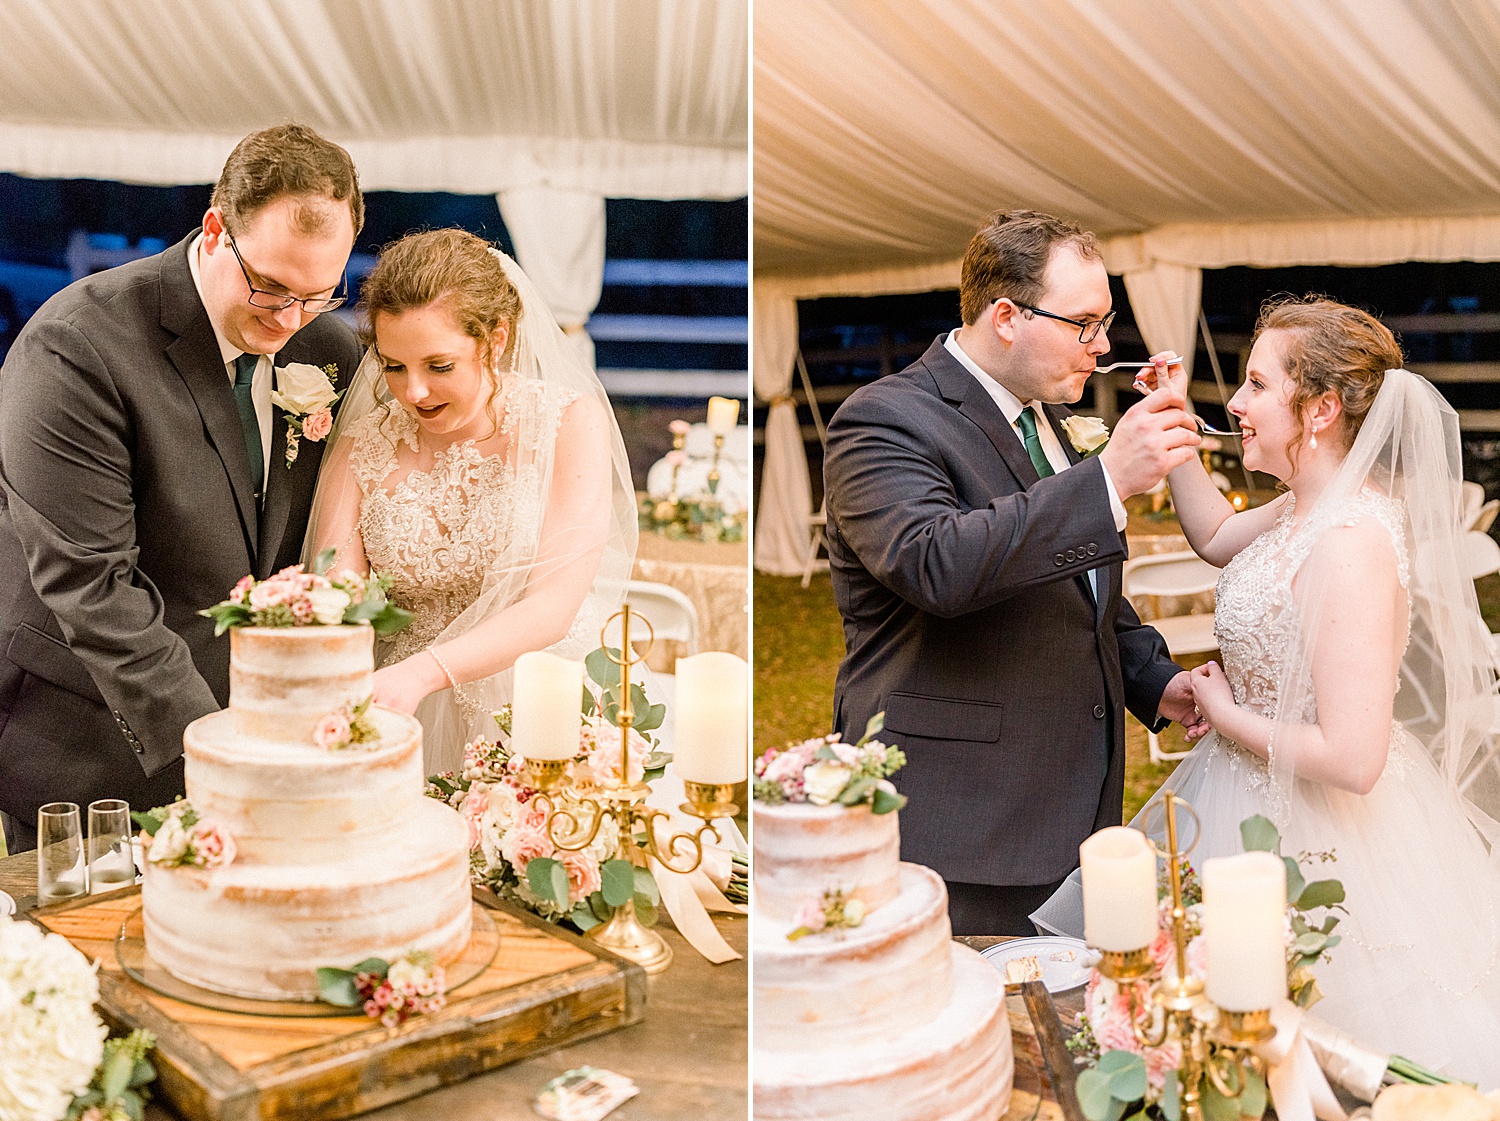 newlyweds enjoy their wedding cake